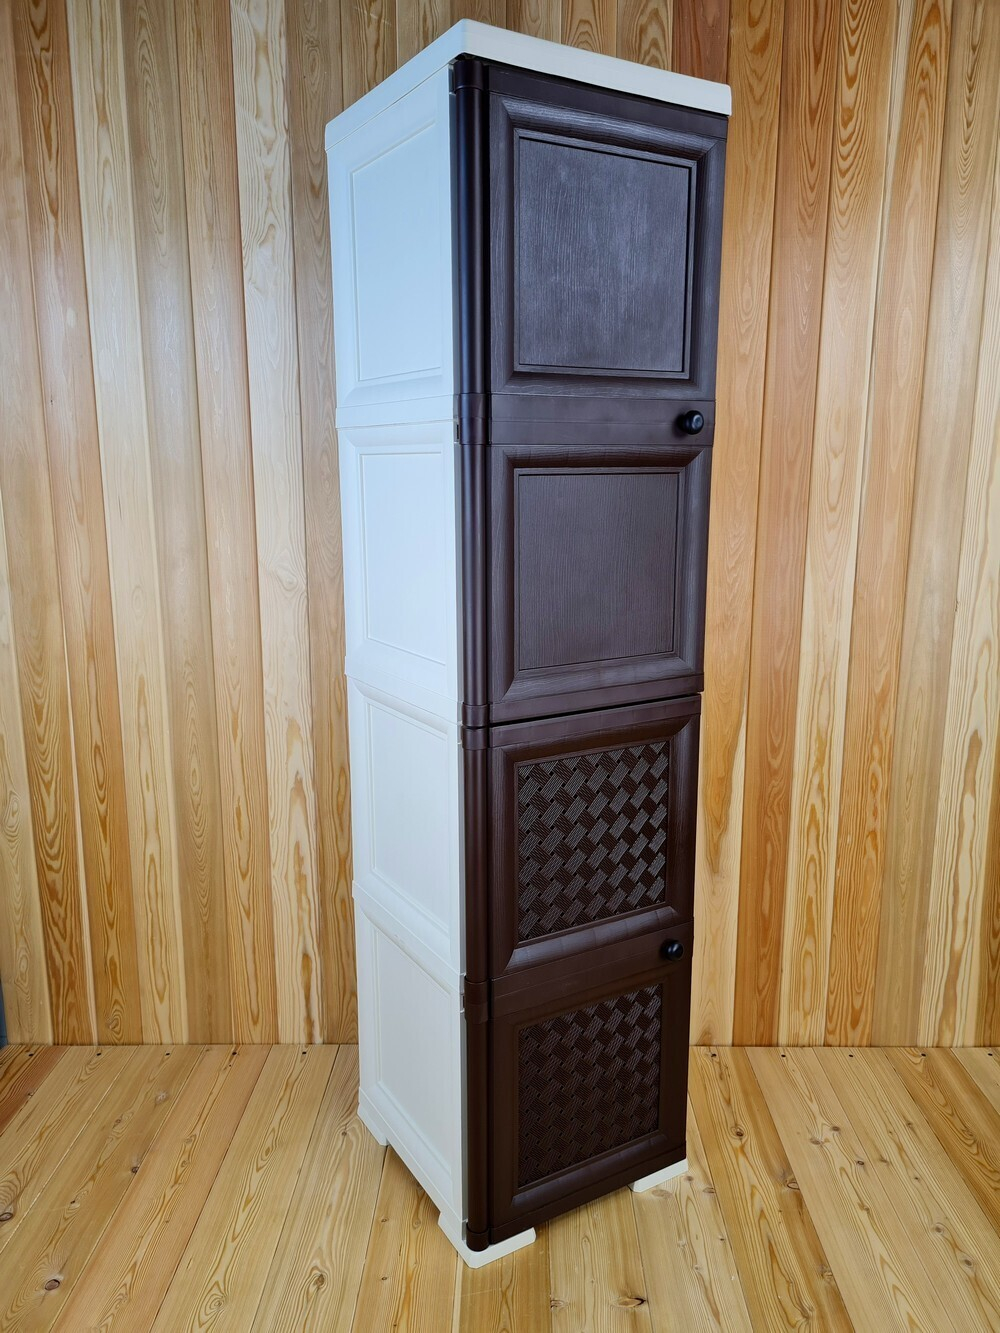 Шкаф высокий, с усиленными рёбрами жёсткости "УЮТ", 40,5х42х161,5 h, 2 дверцы. Цвет: Бежево-коричневый. Арт: Э-046-БД